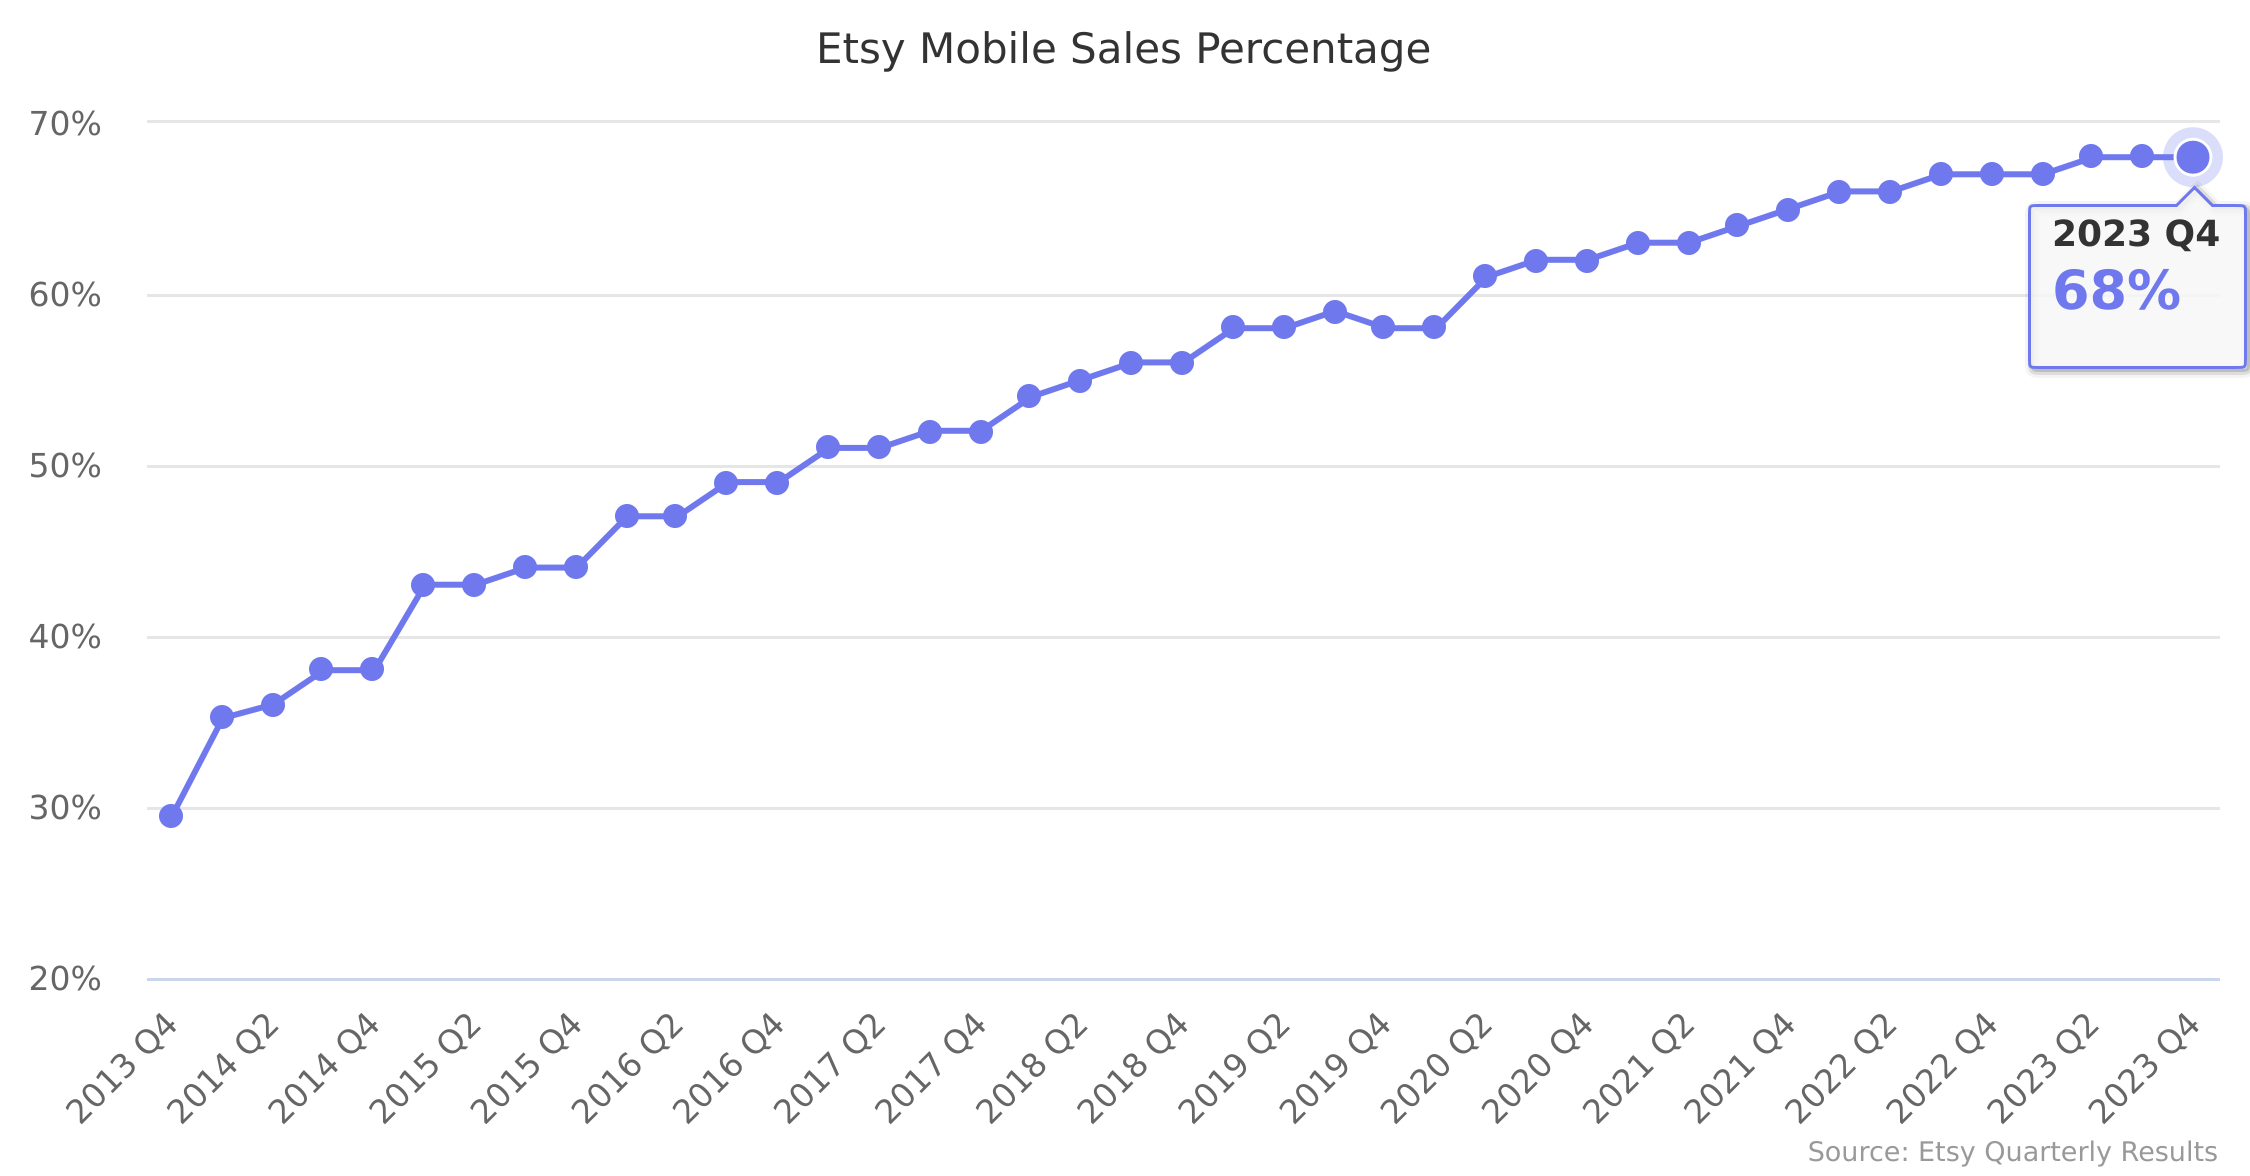 Etsy Mobile Sales Percentage 2013-2023